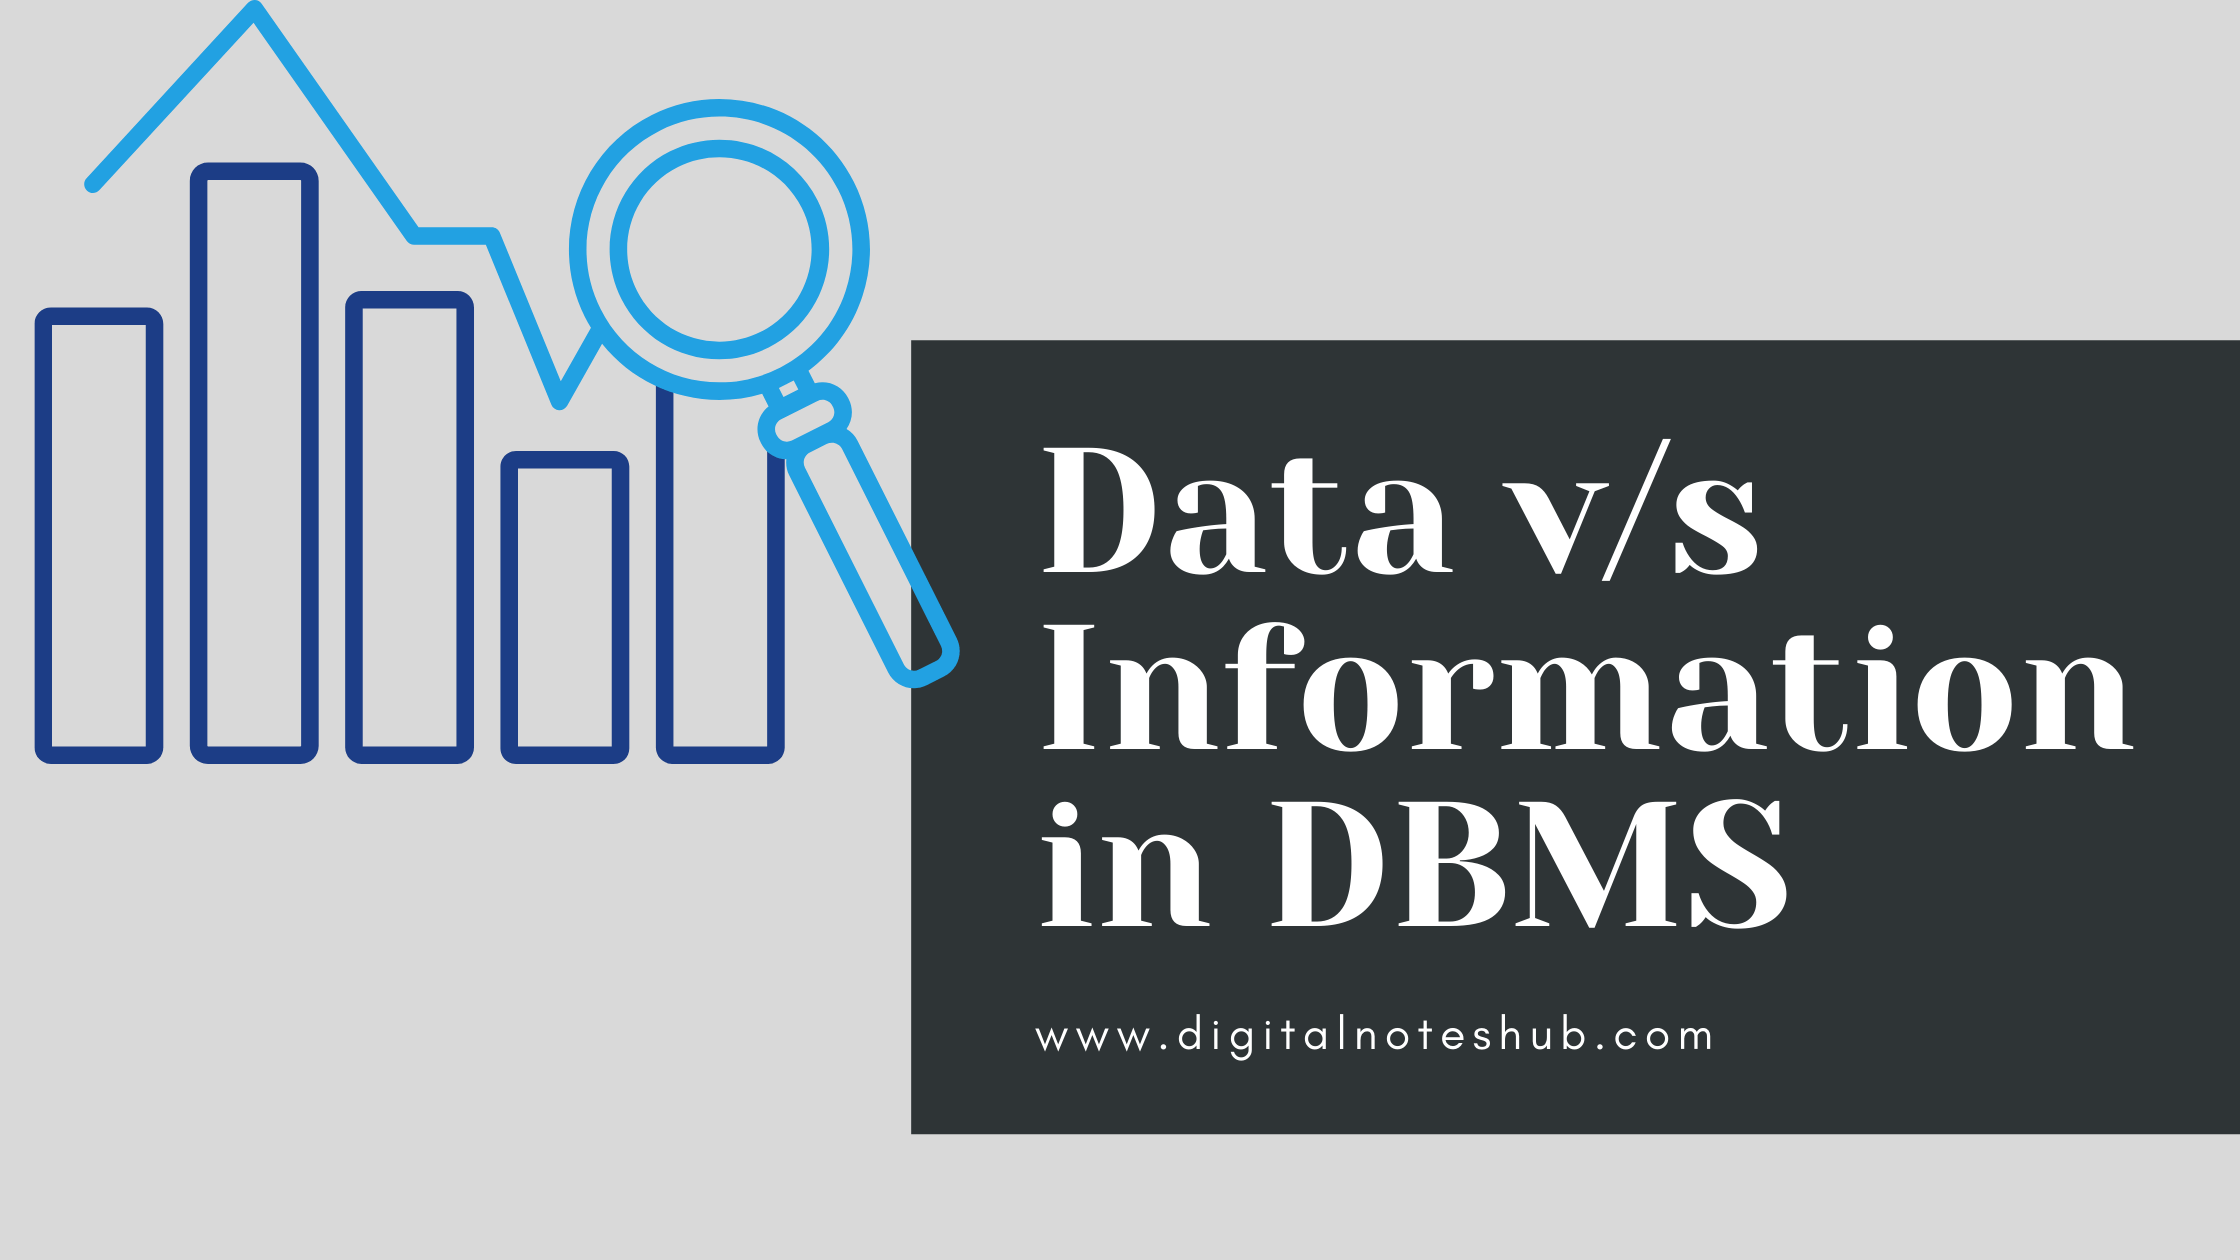 Data vs information